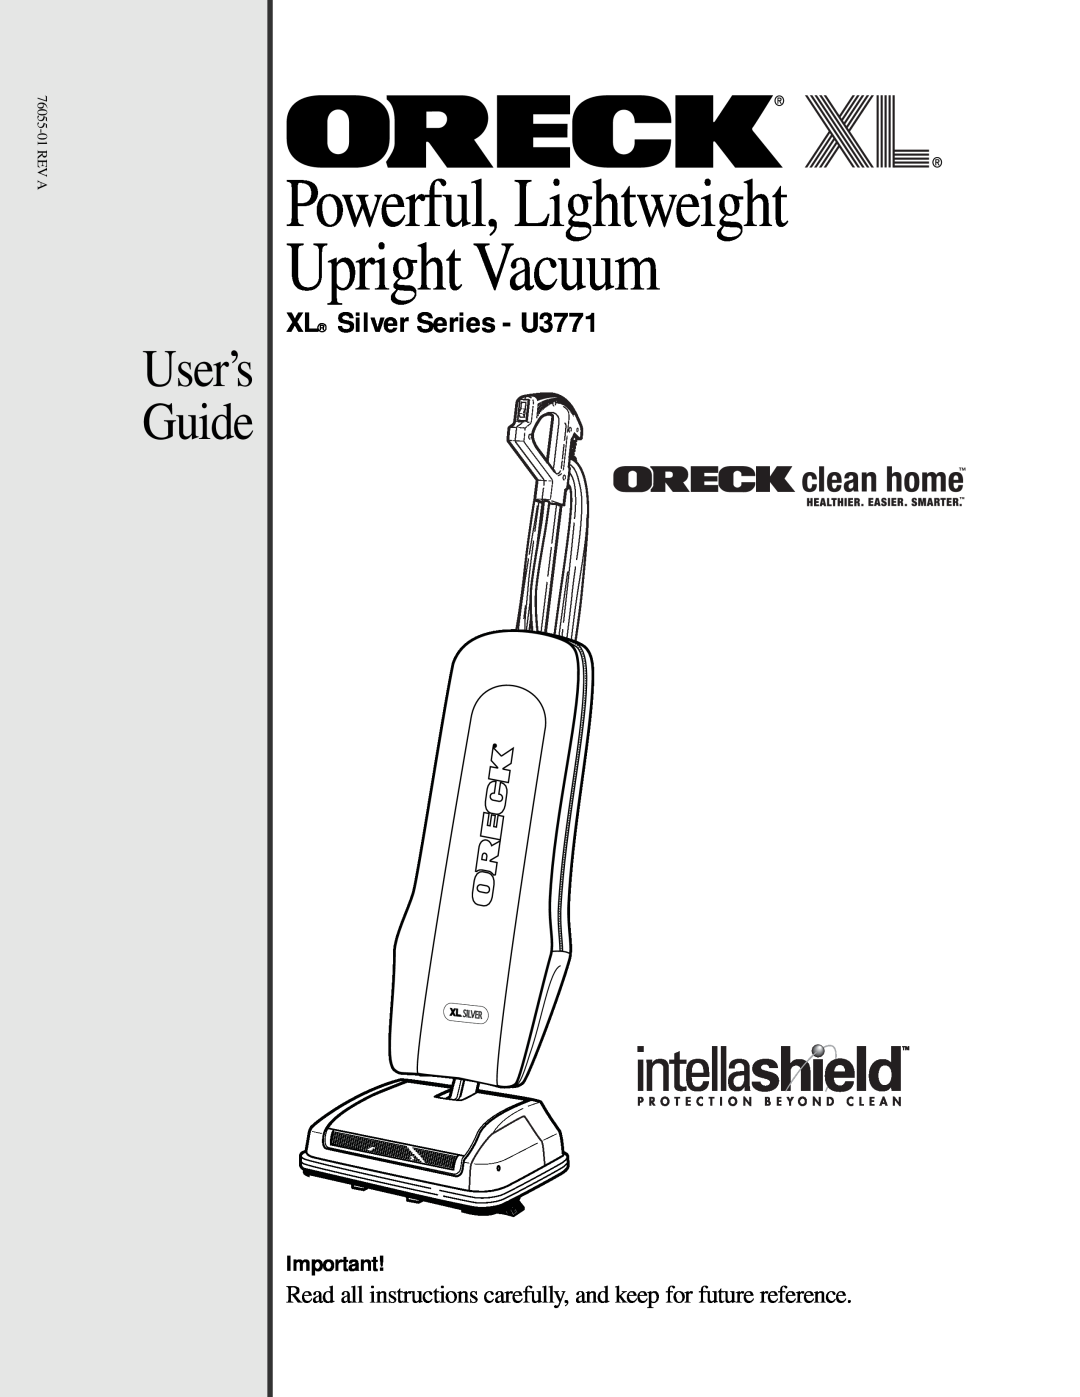 Oreck manual User’s Guide, XL Silver Series - U3771, Powerful, Lightweight Upright Vacuum 